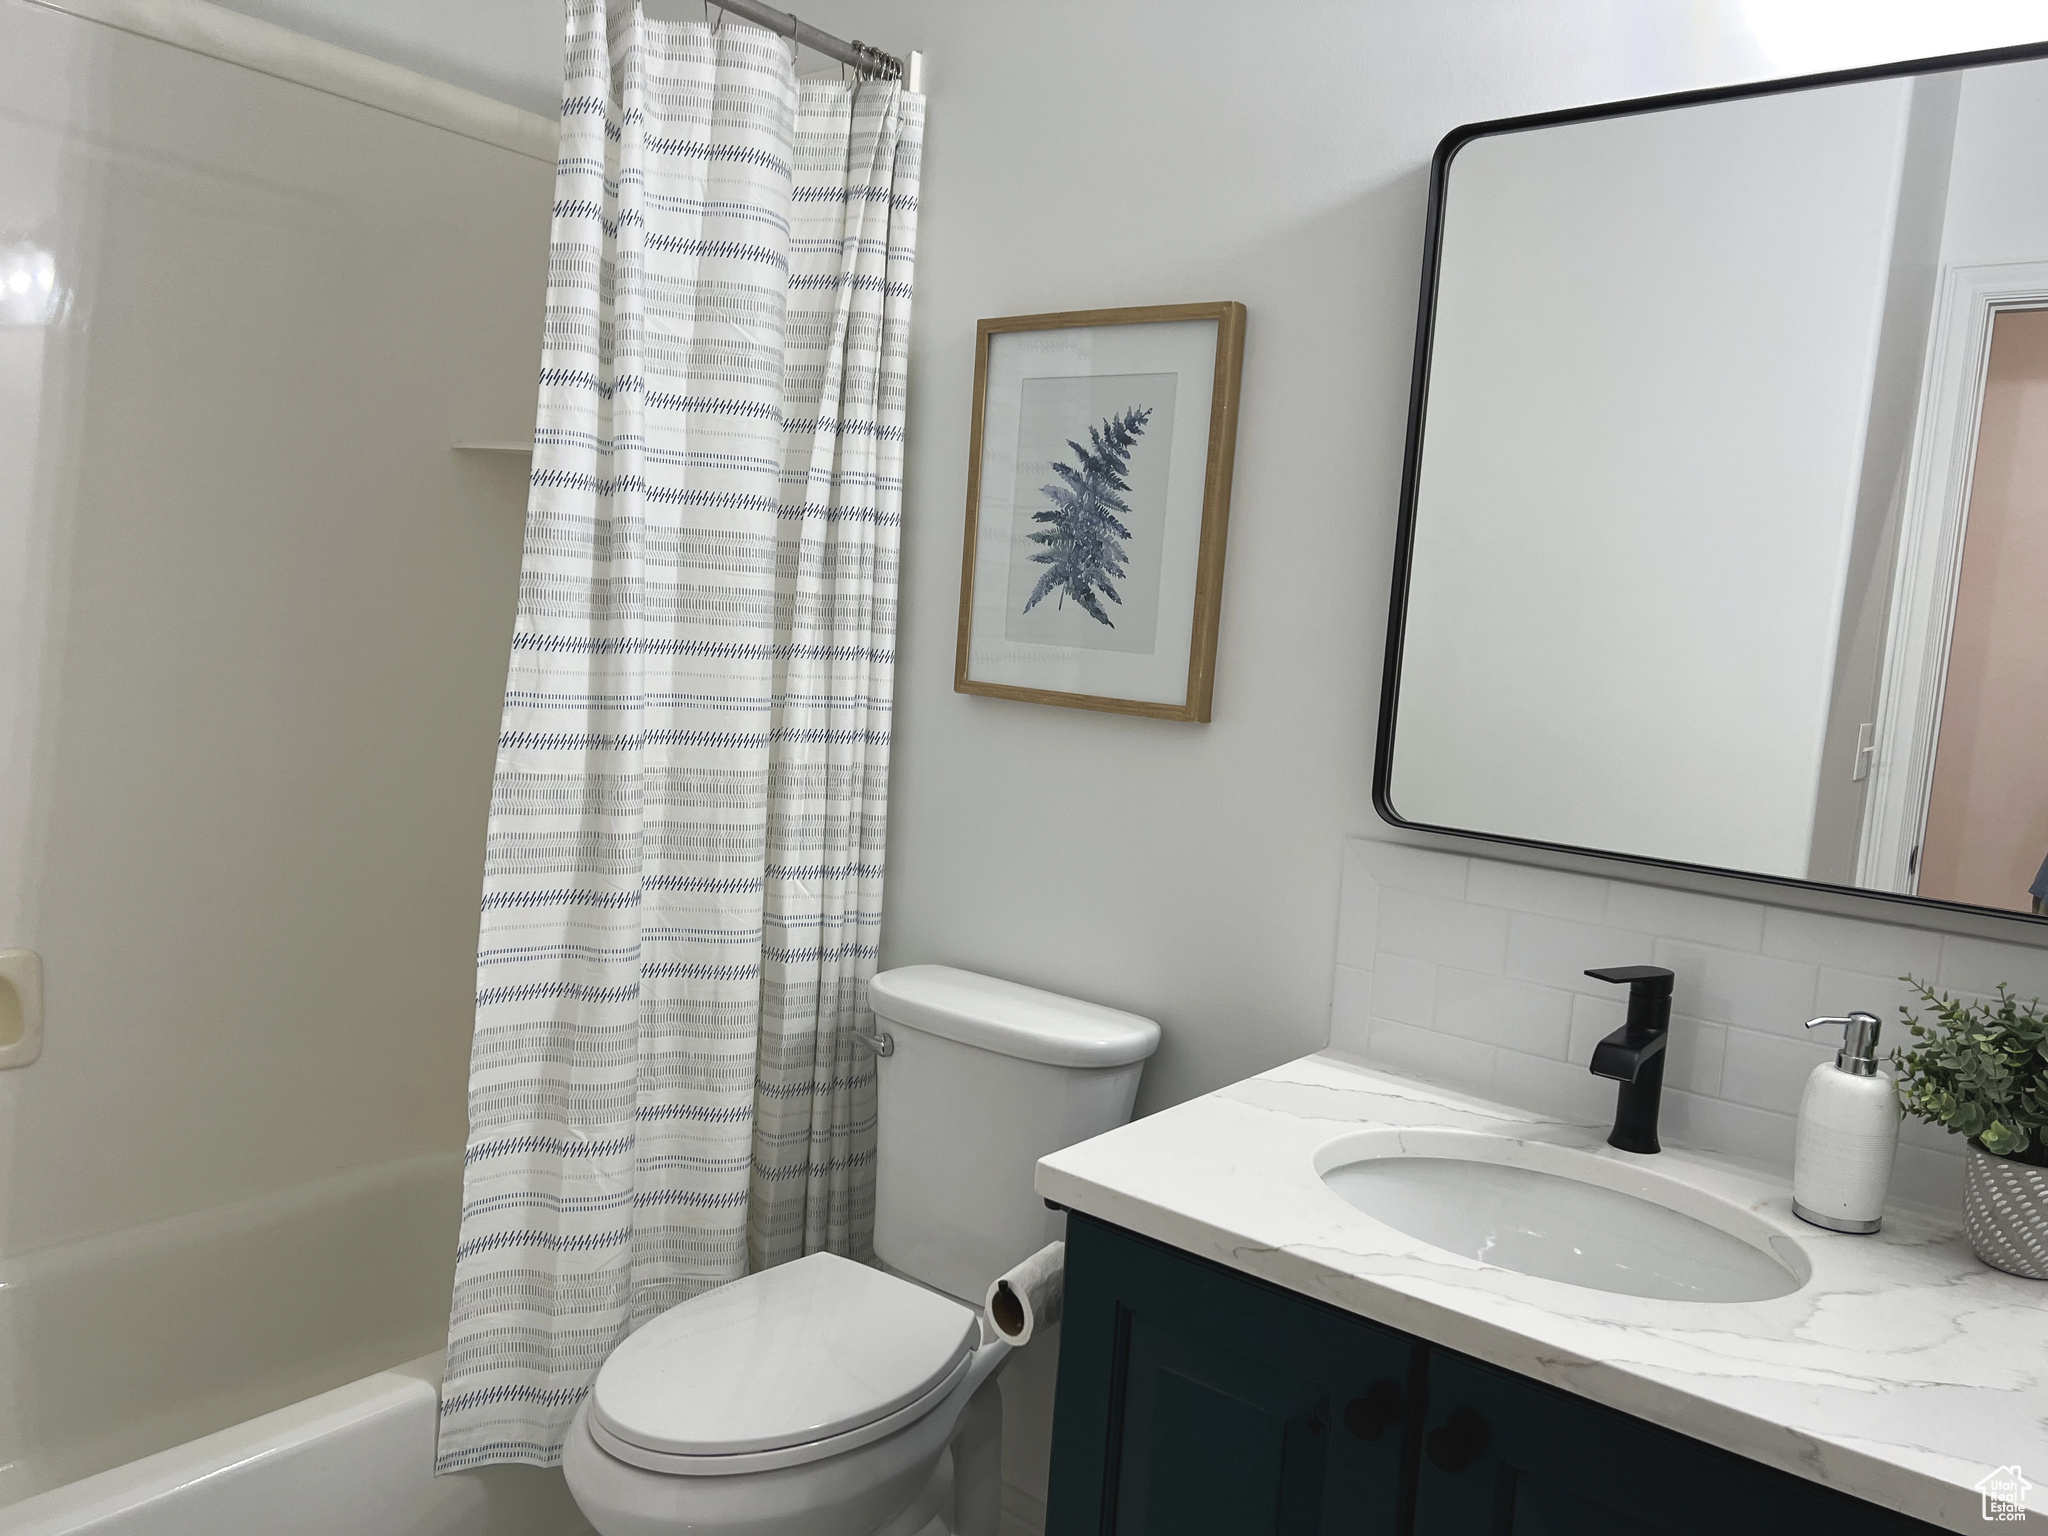 Full bathroom with backsplash, shower / tub combo, vanity, and toilet